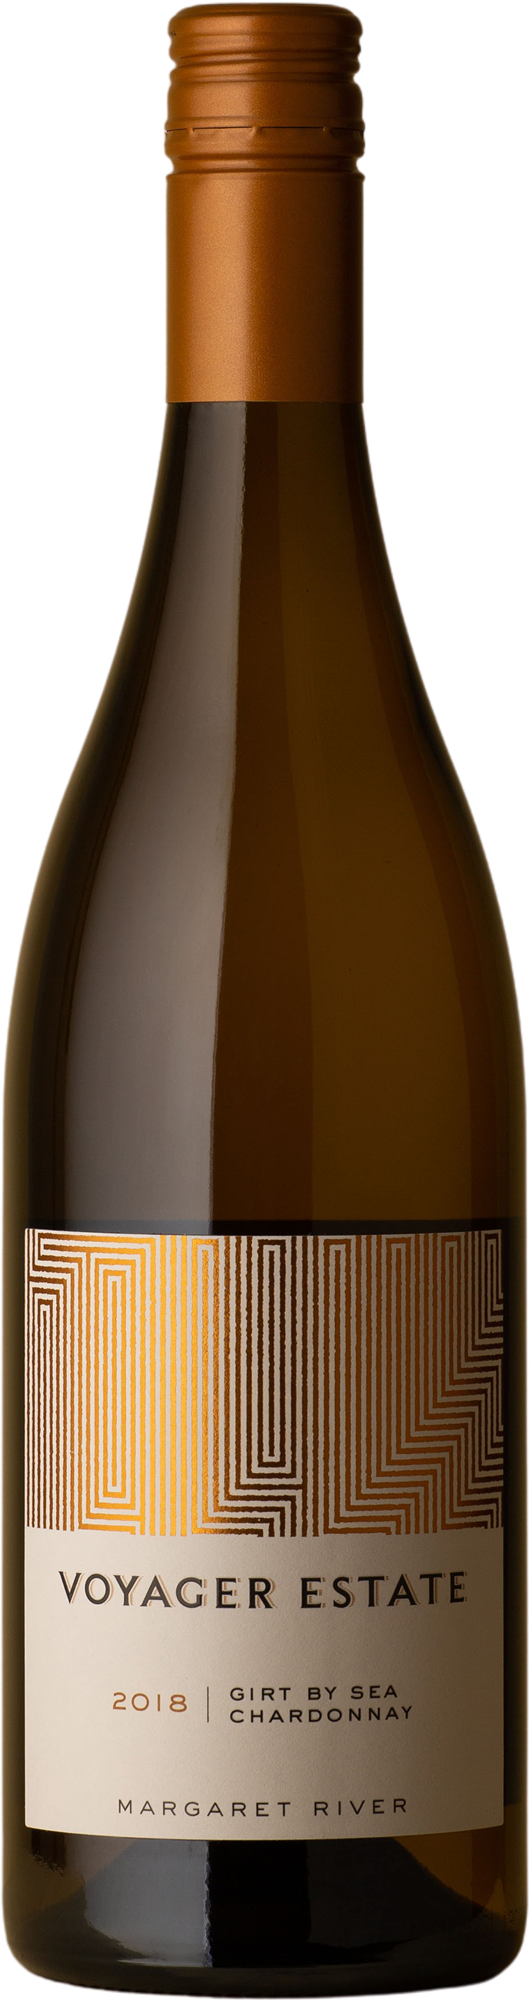 Voyager Estate - Girt by Sea Chardonnay 2018 White Wine